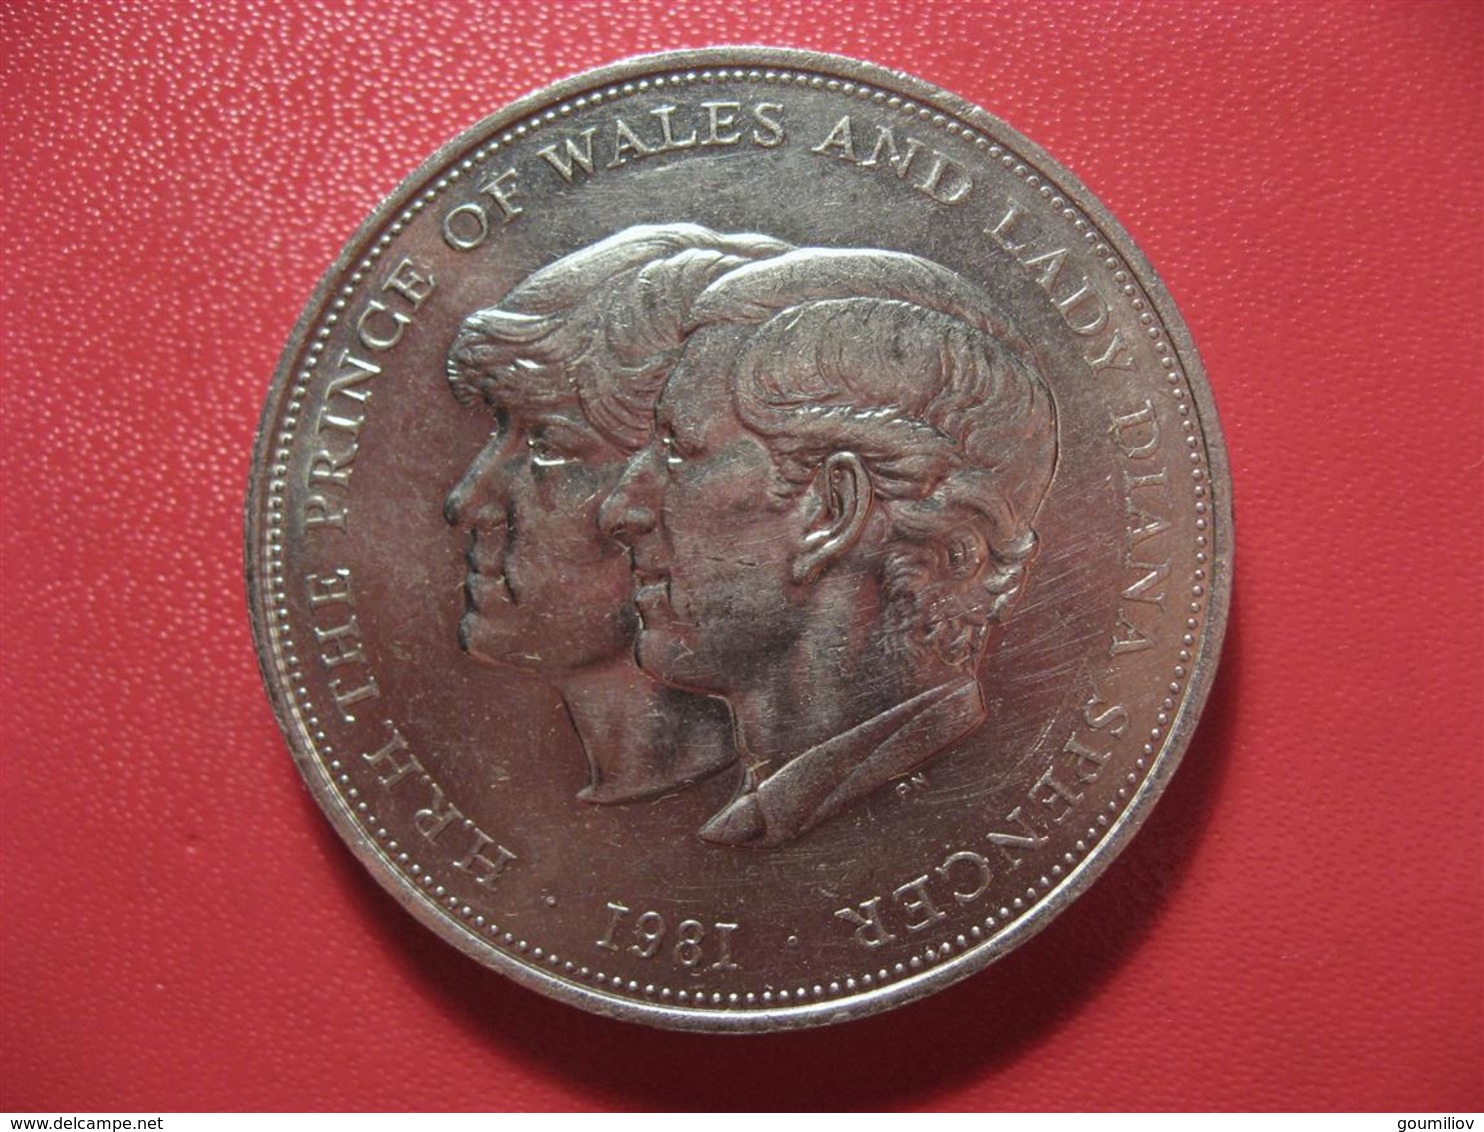 Grande-Bretagne - UK - 25 New Pence 1981 3000 - 25 New Pence